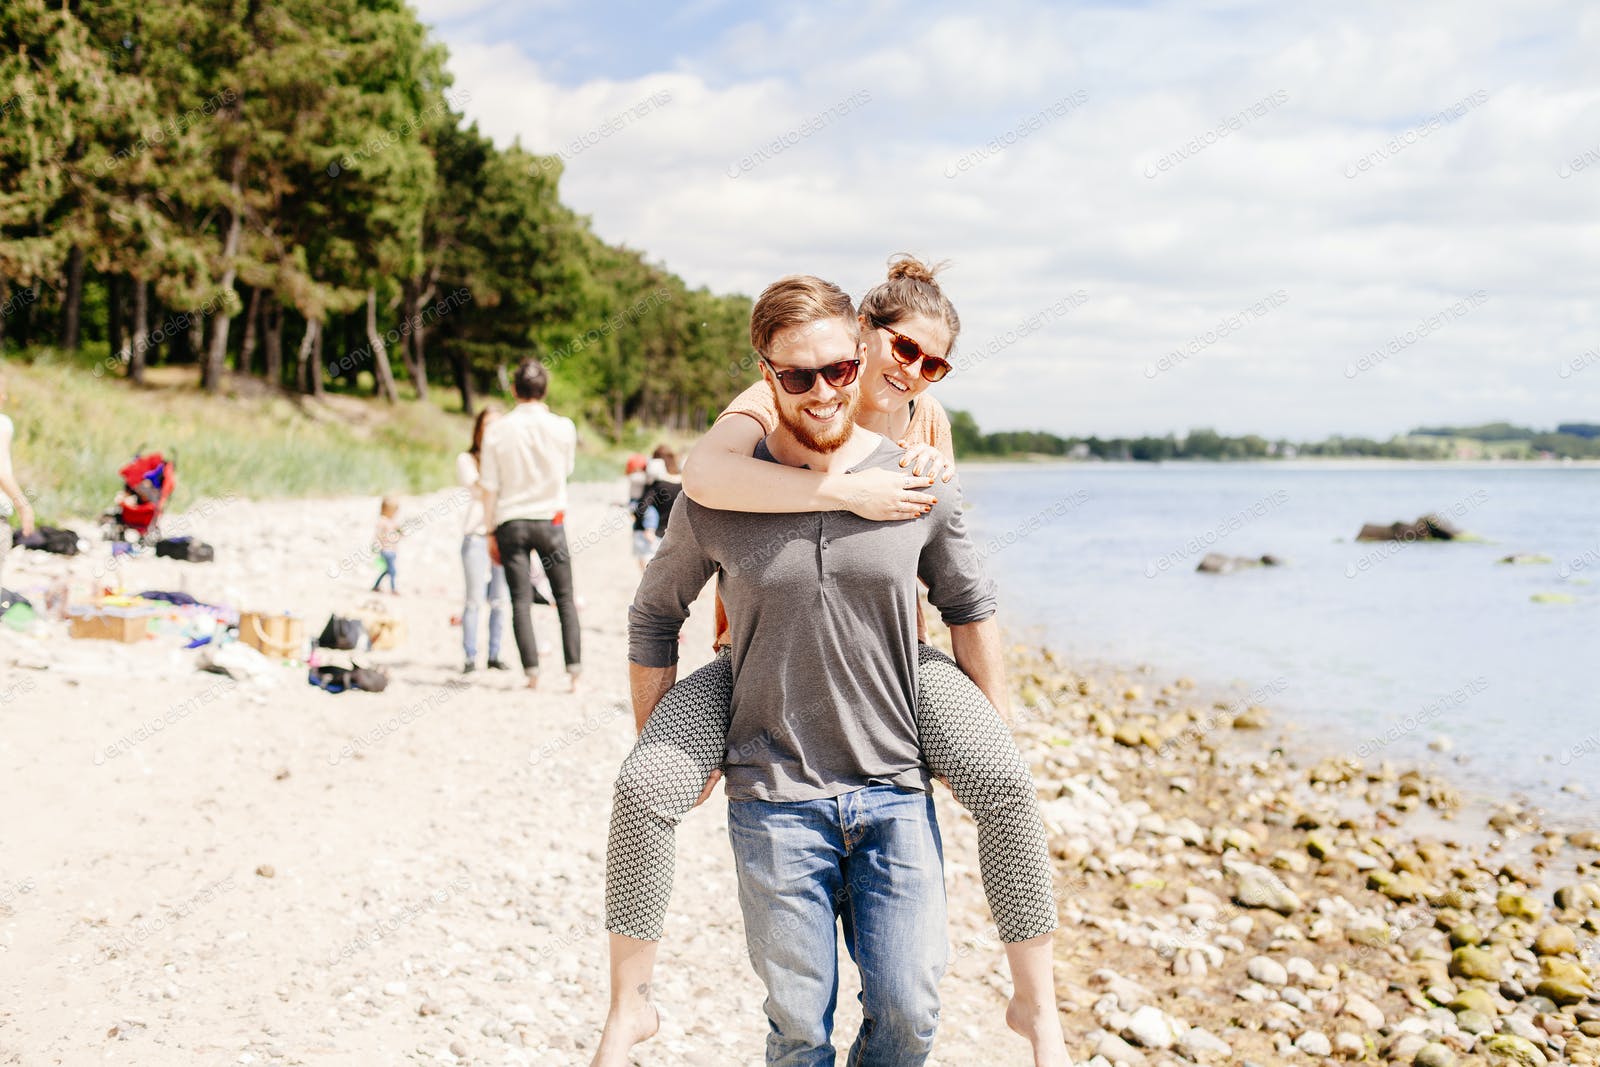 Man giving girlfriend piggyback ride on beach photo by astrakanimage on Envato Elements